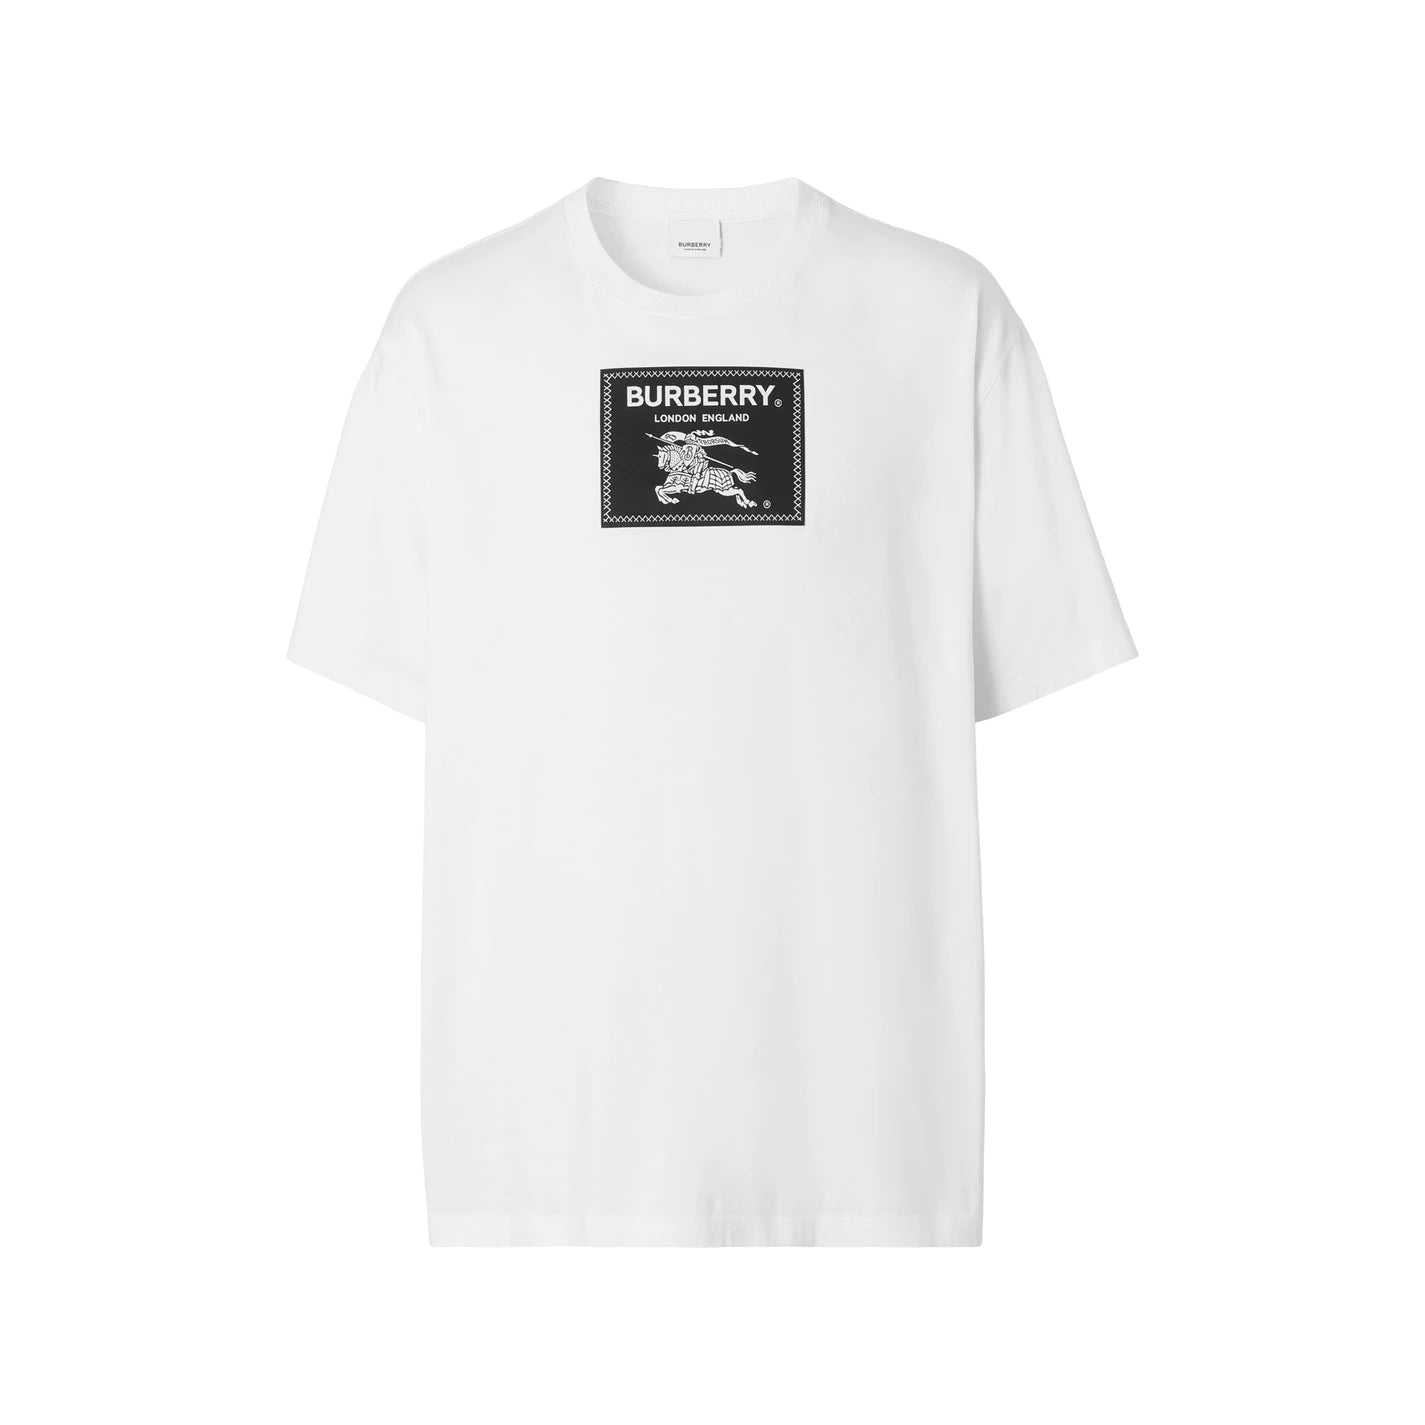 Burberry Prorsum Label T Shirt